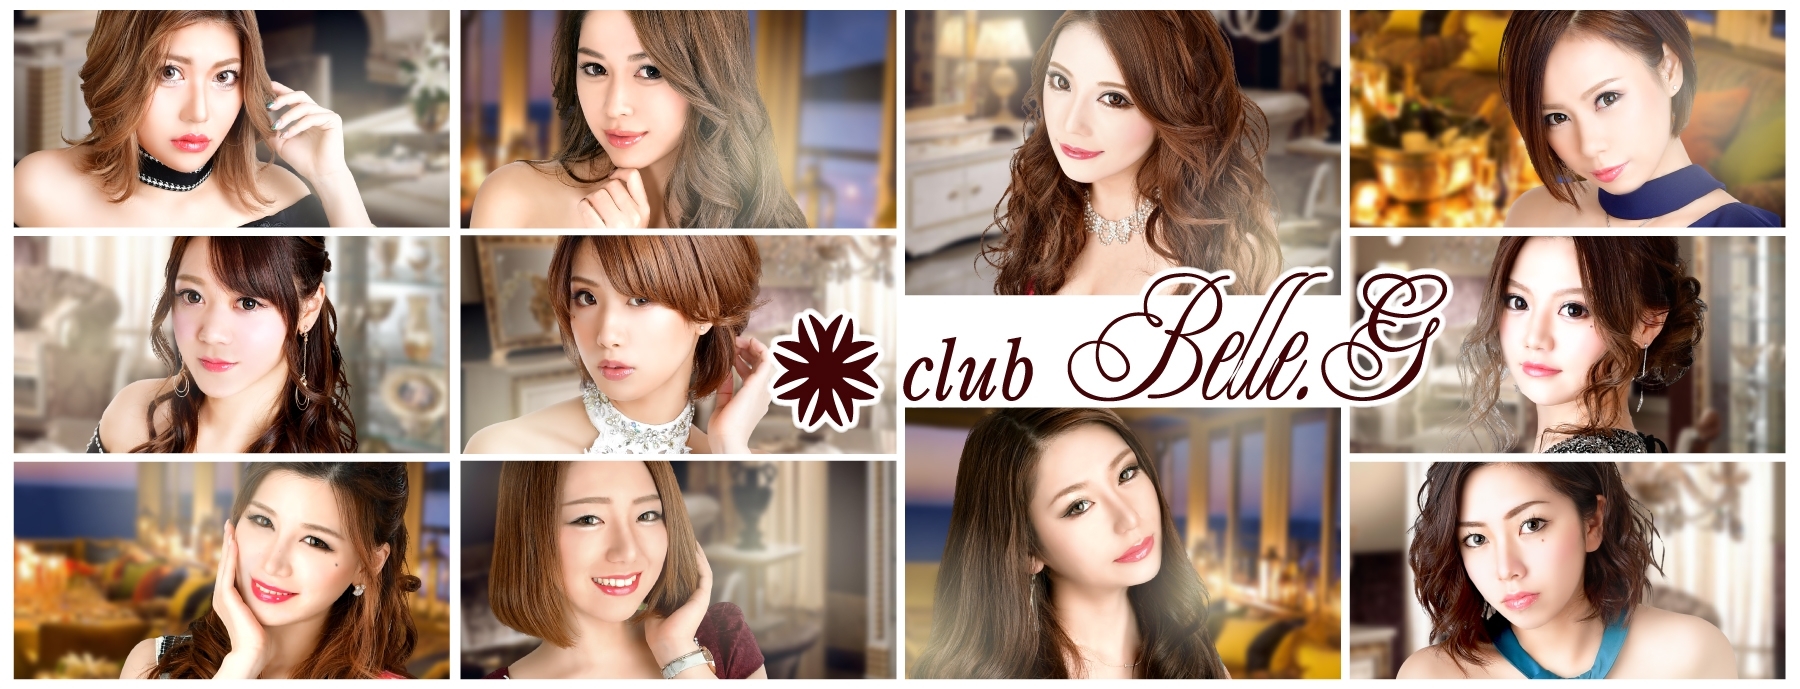 LEE򌤖x LoN club Belle.G@-x-̓X܉摜1